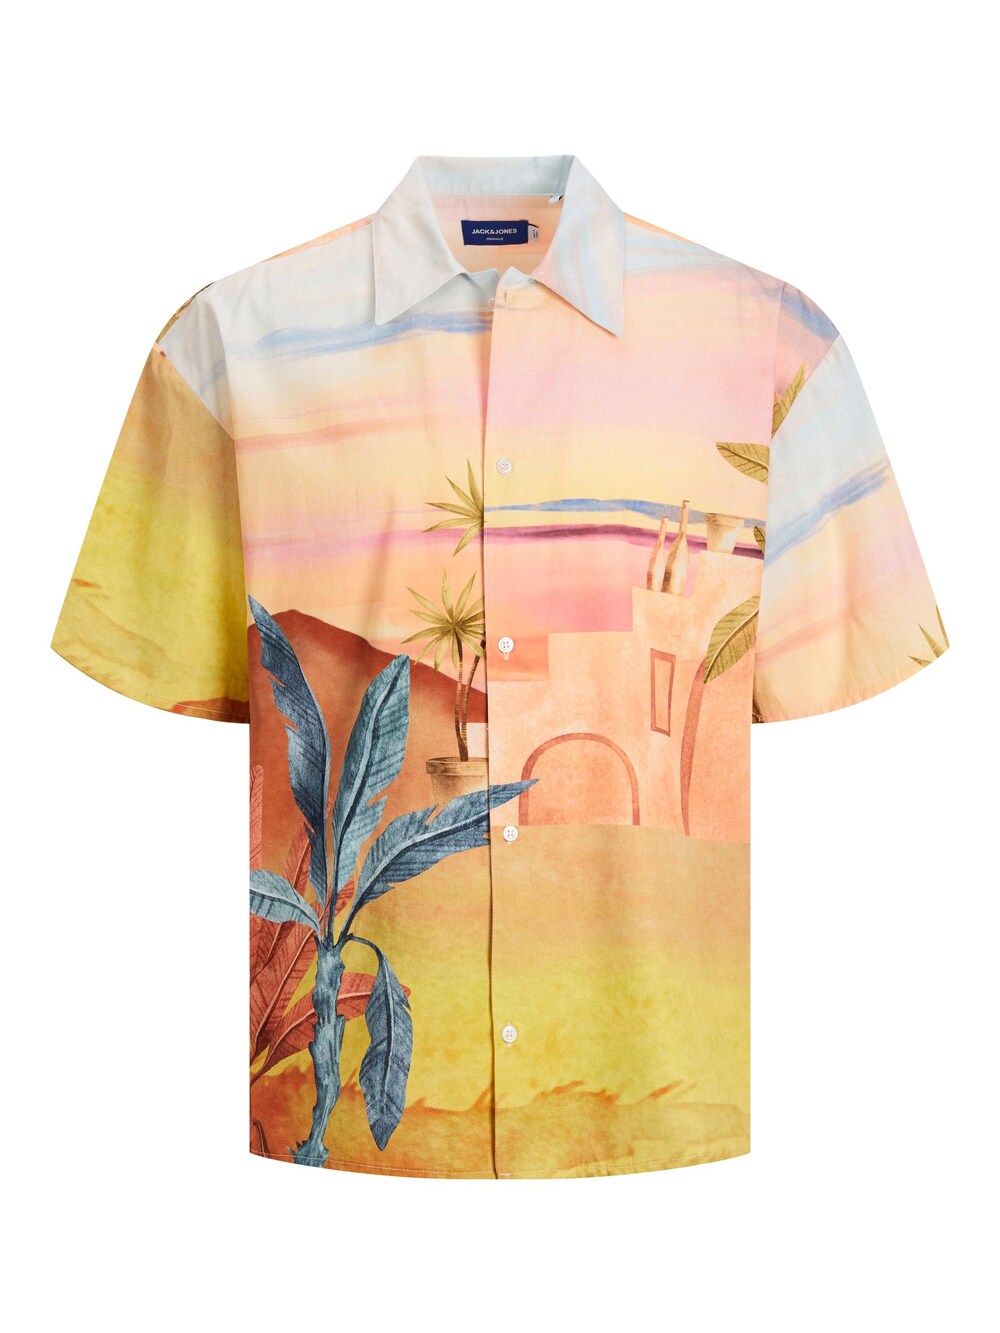 Комфортная рубашка на пуговицах JACK & JONES Landscape, абрикос/лобстер лобстер